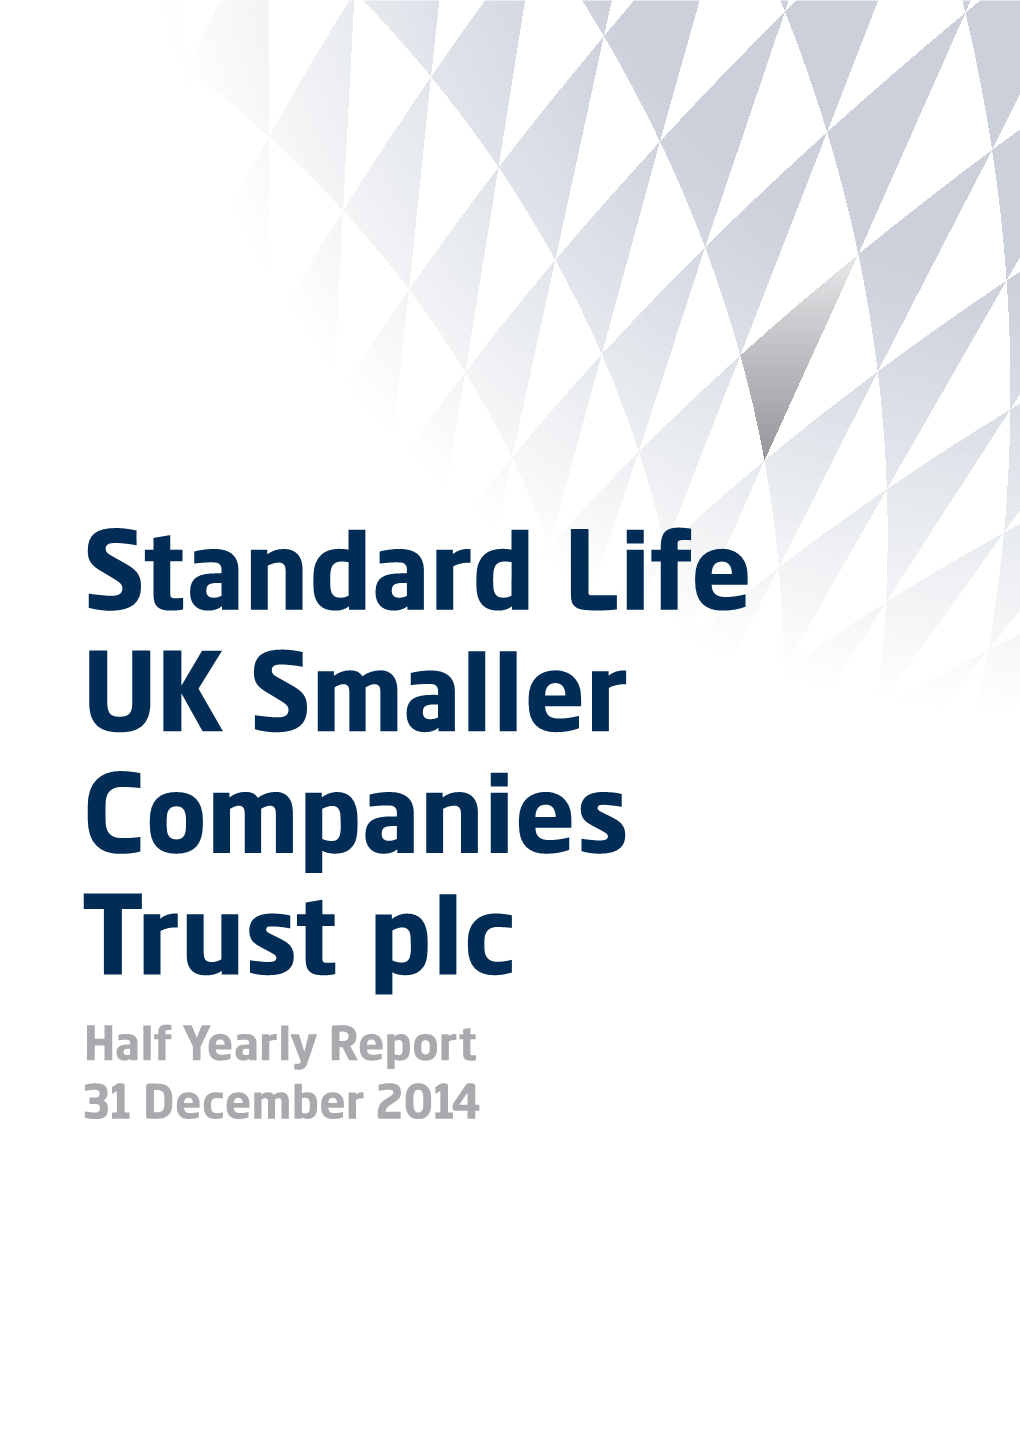 Standard Life UK Smaller Companies Trust Plc Half Yearly Report 31 December 2014 Contents